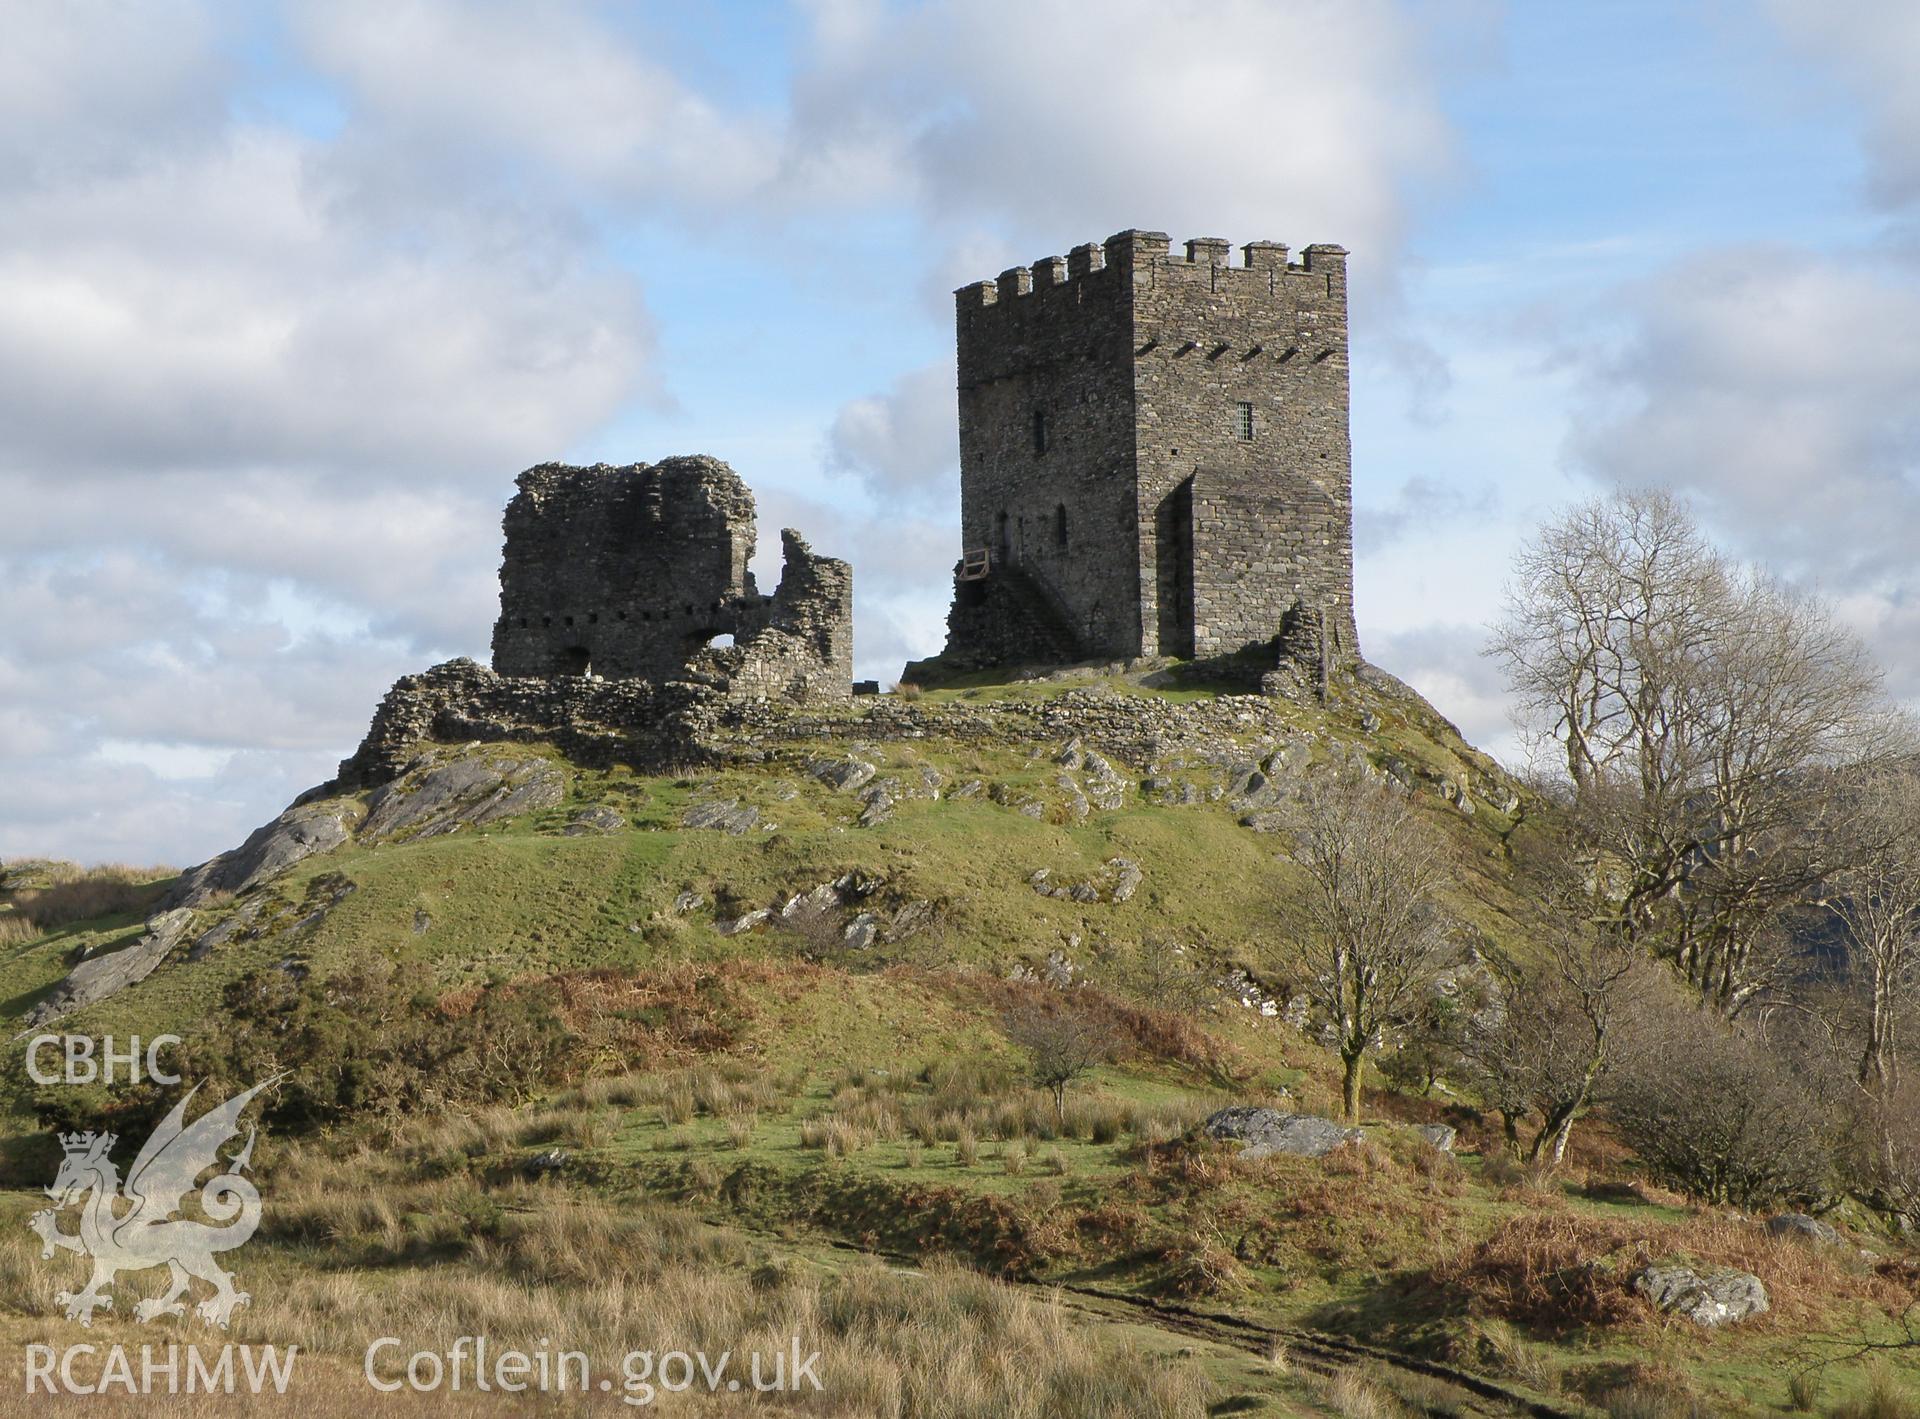 Colour photo of Dolwyddelan Castle, taken by Paul R. Davis, 13th February 2010.